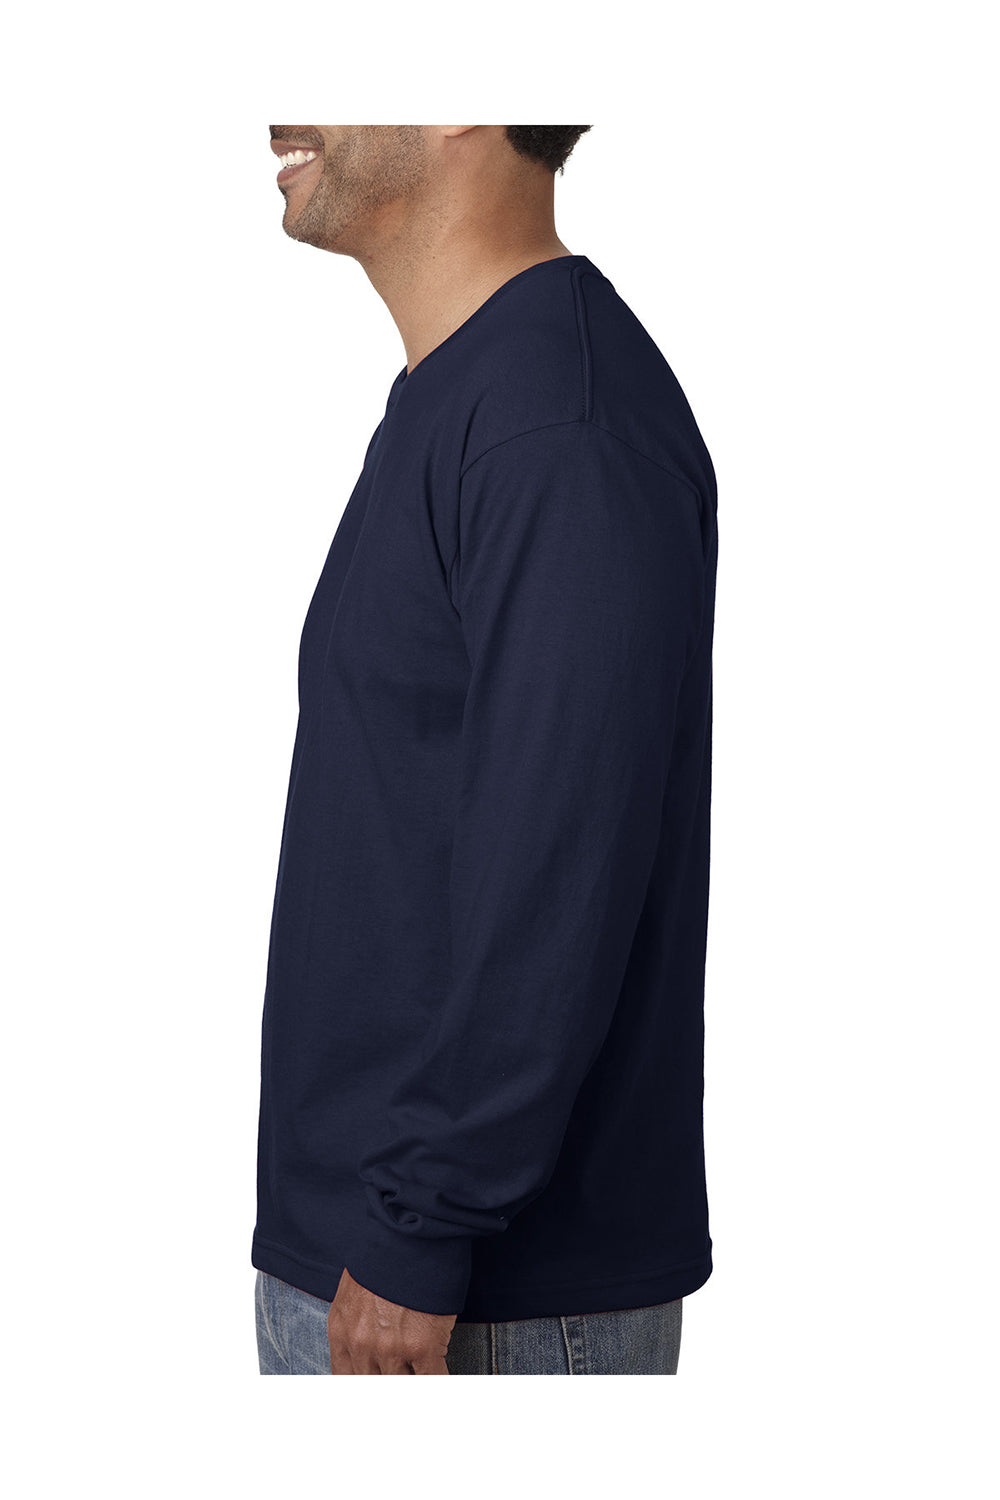 Bayside BA5060 Mens USA Made Long Sleeve Crewneck T-Shirt Light Navy Blue Model Side